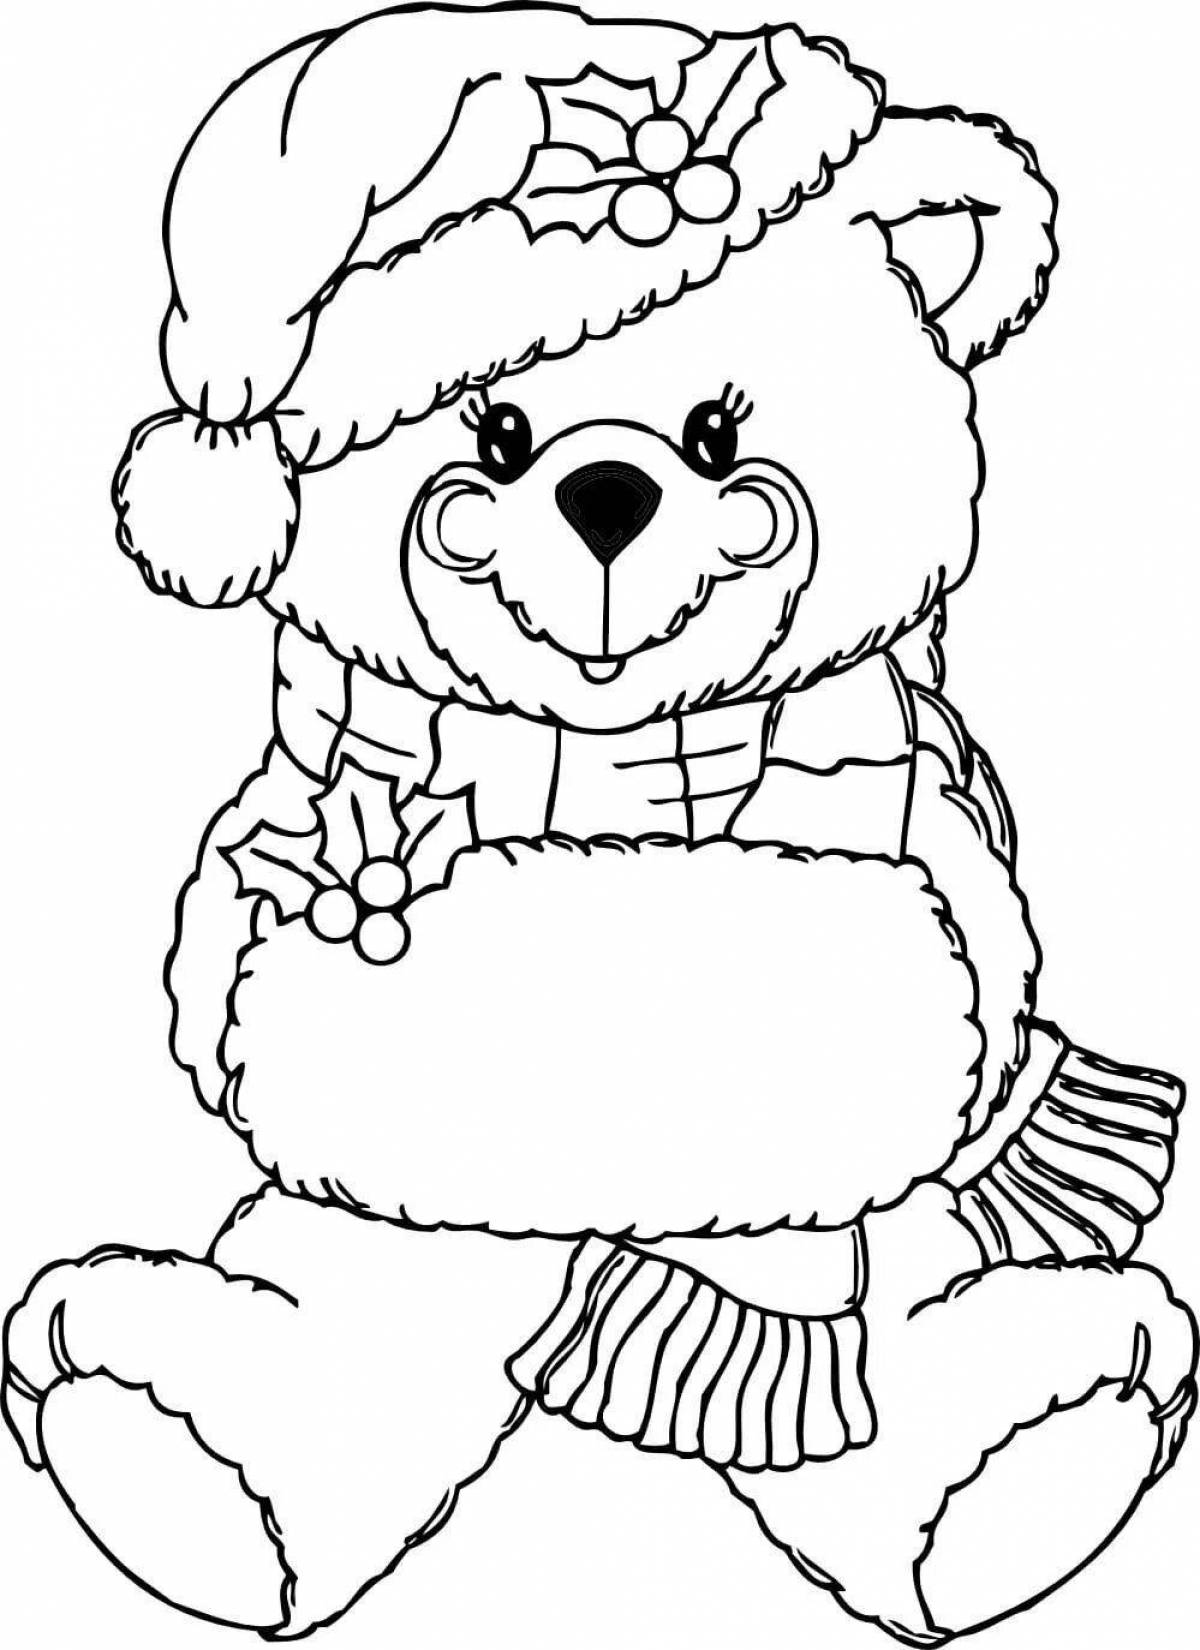 Fancy teddy bear coloring book for kids